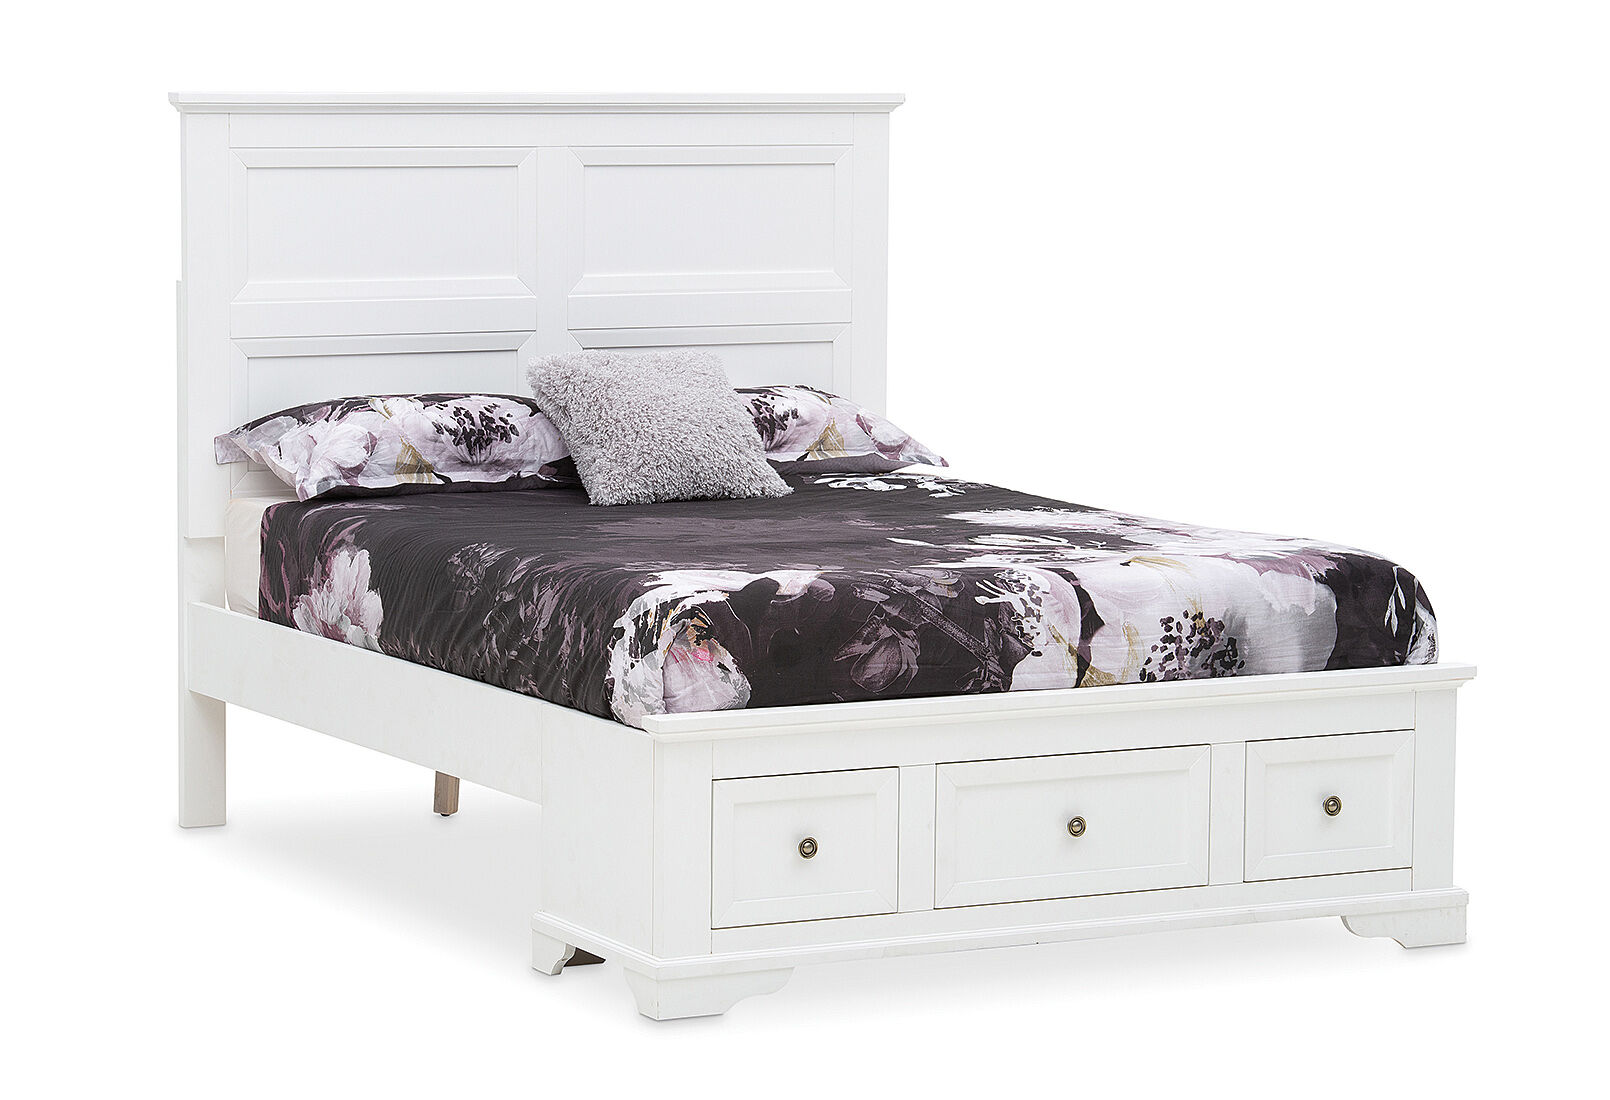 Chanelle Queen Bed Amart Furniture